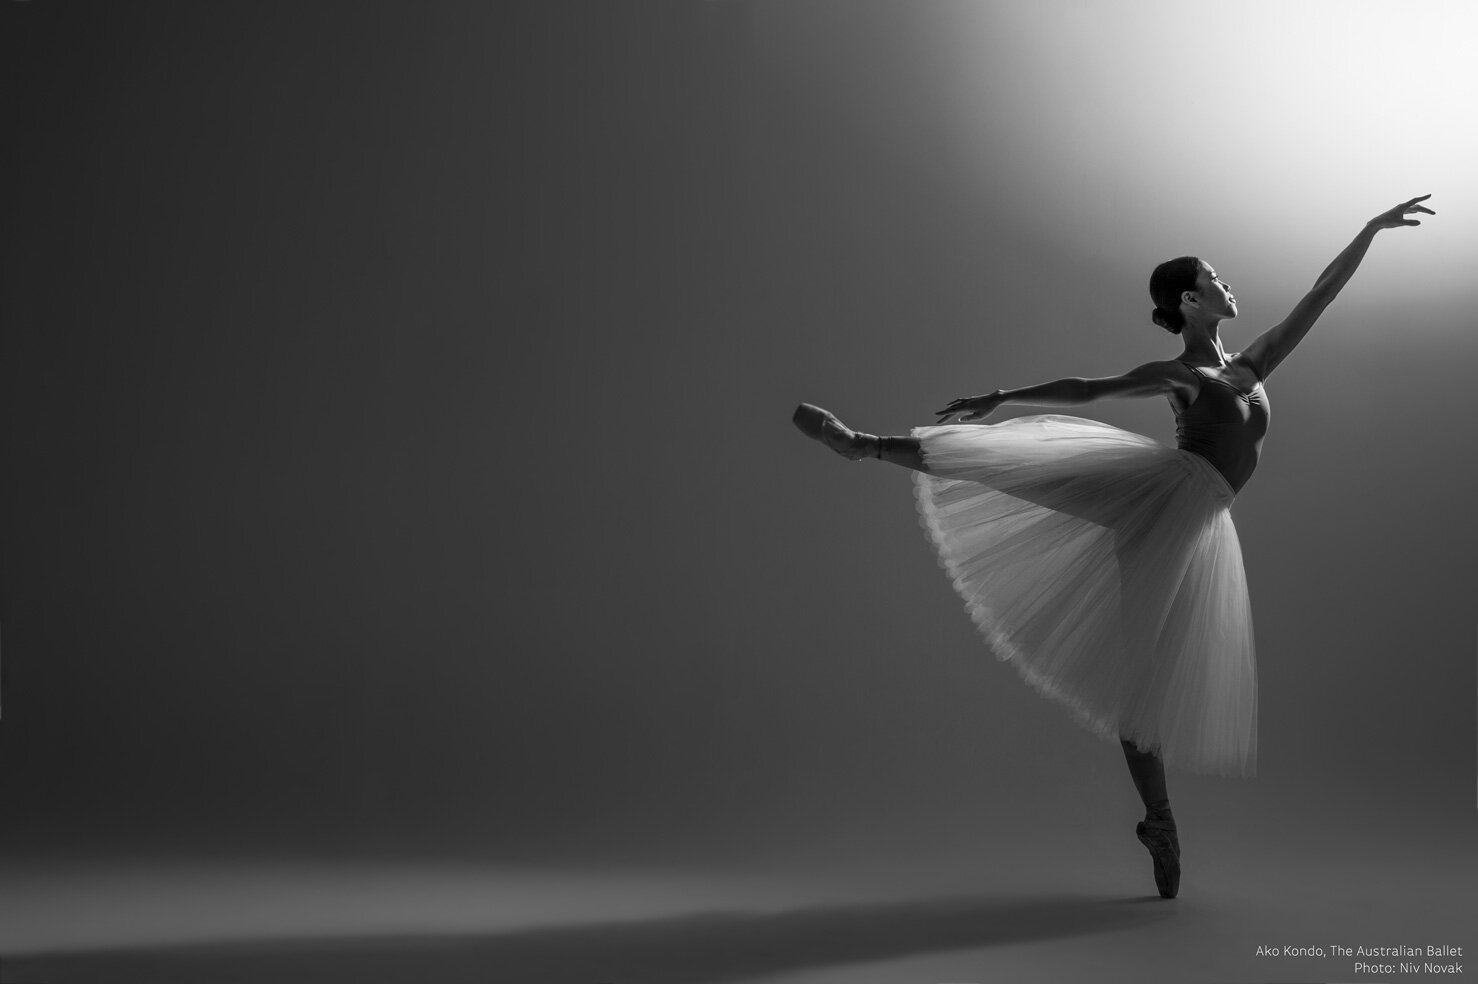 Ako Kondo, The Australian Ballet